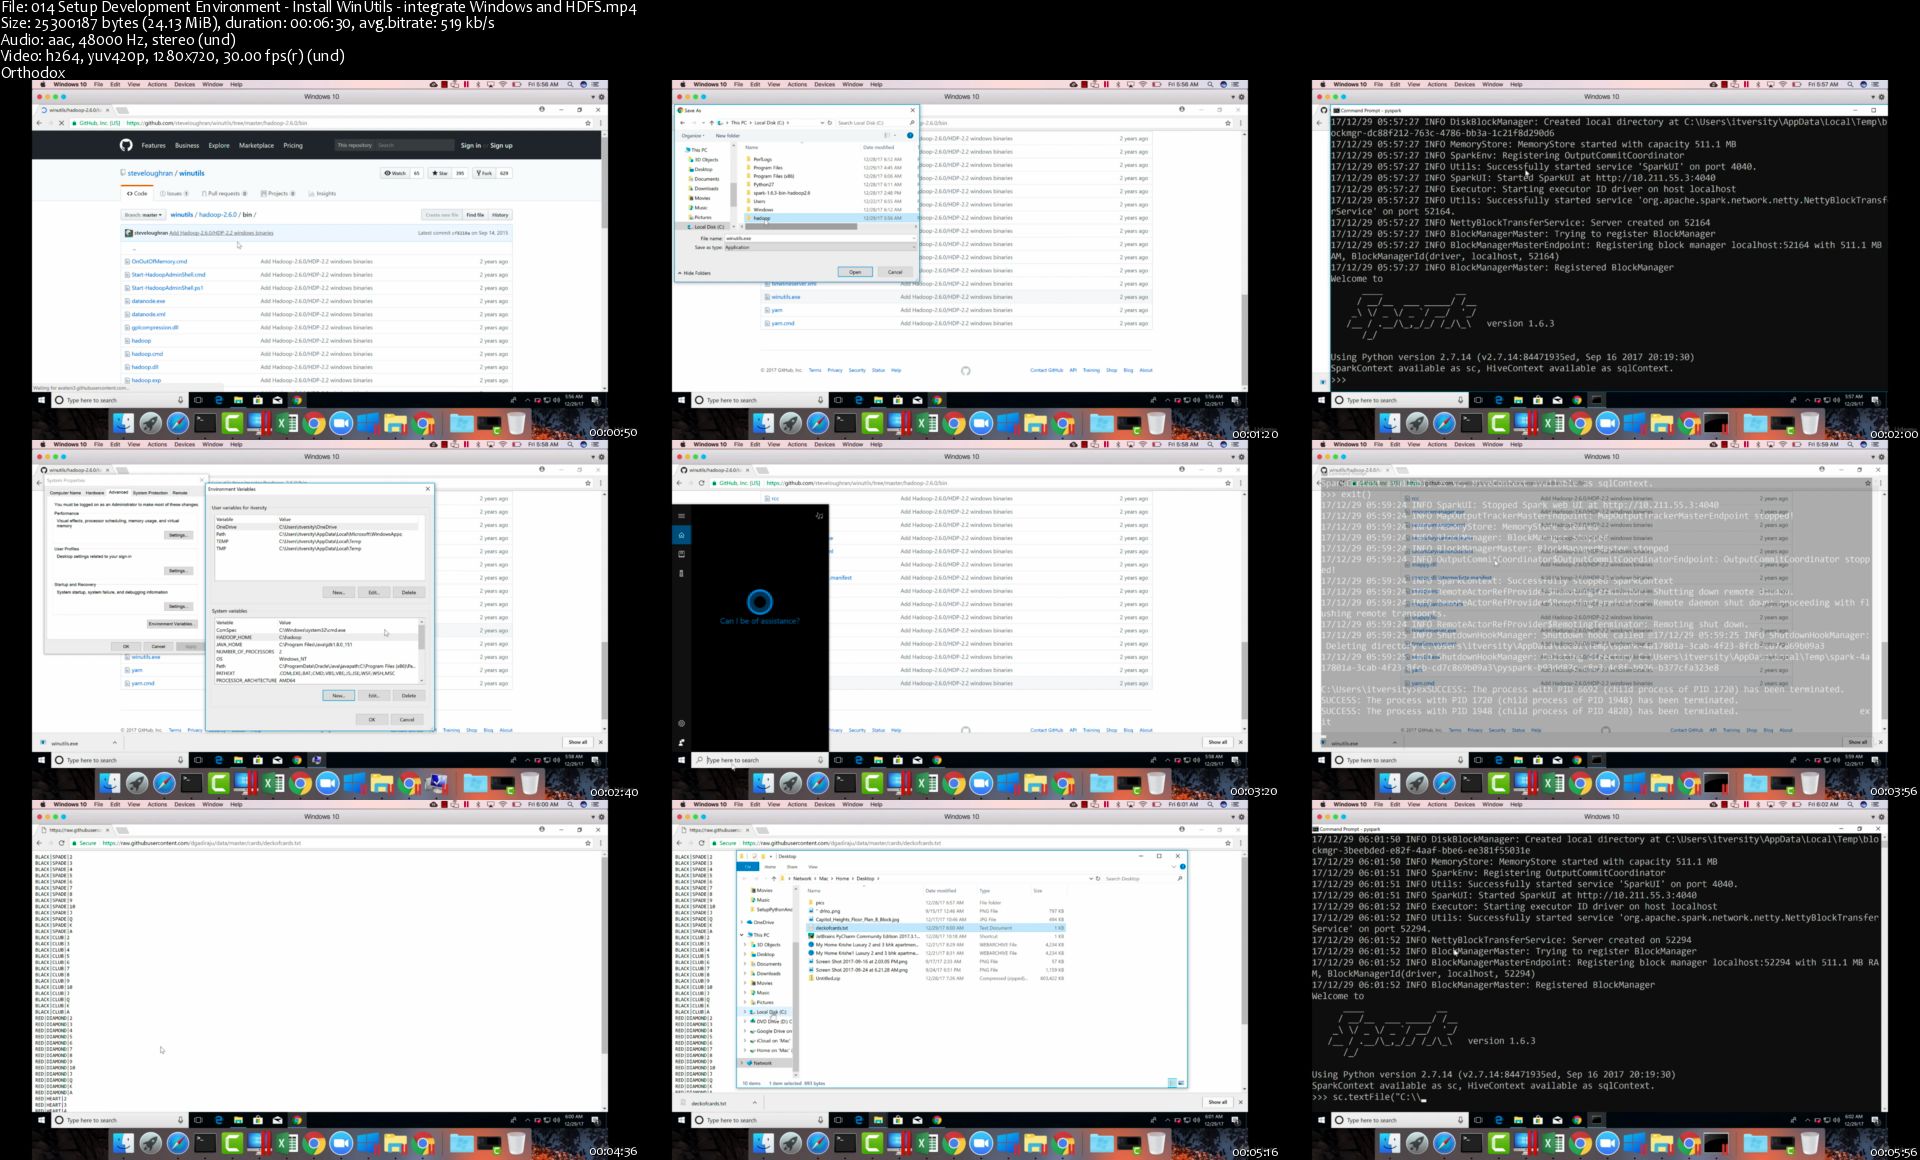 014-Setup-Development-Environment-Install-Win-Utils-integrate-Windows-and-HDFS-s.jpg